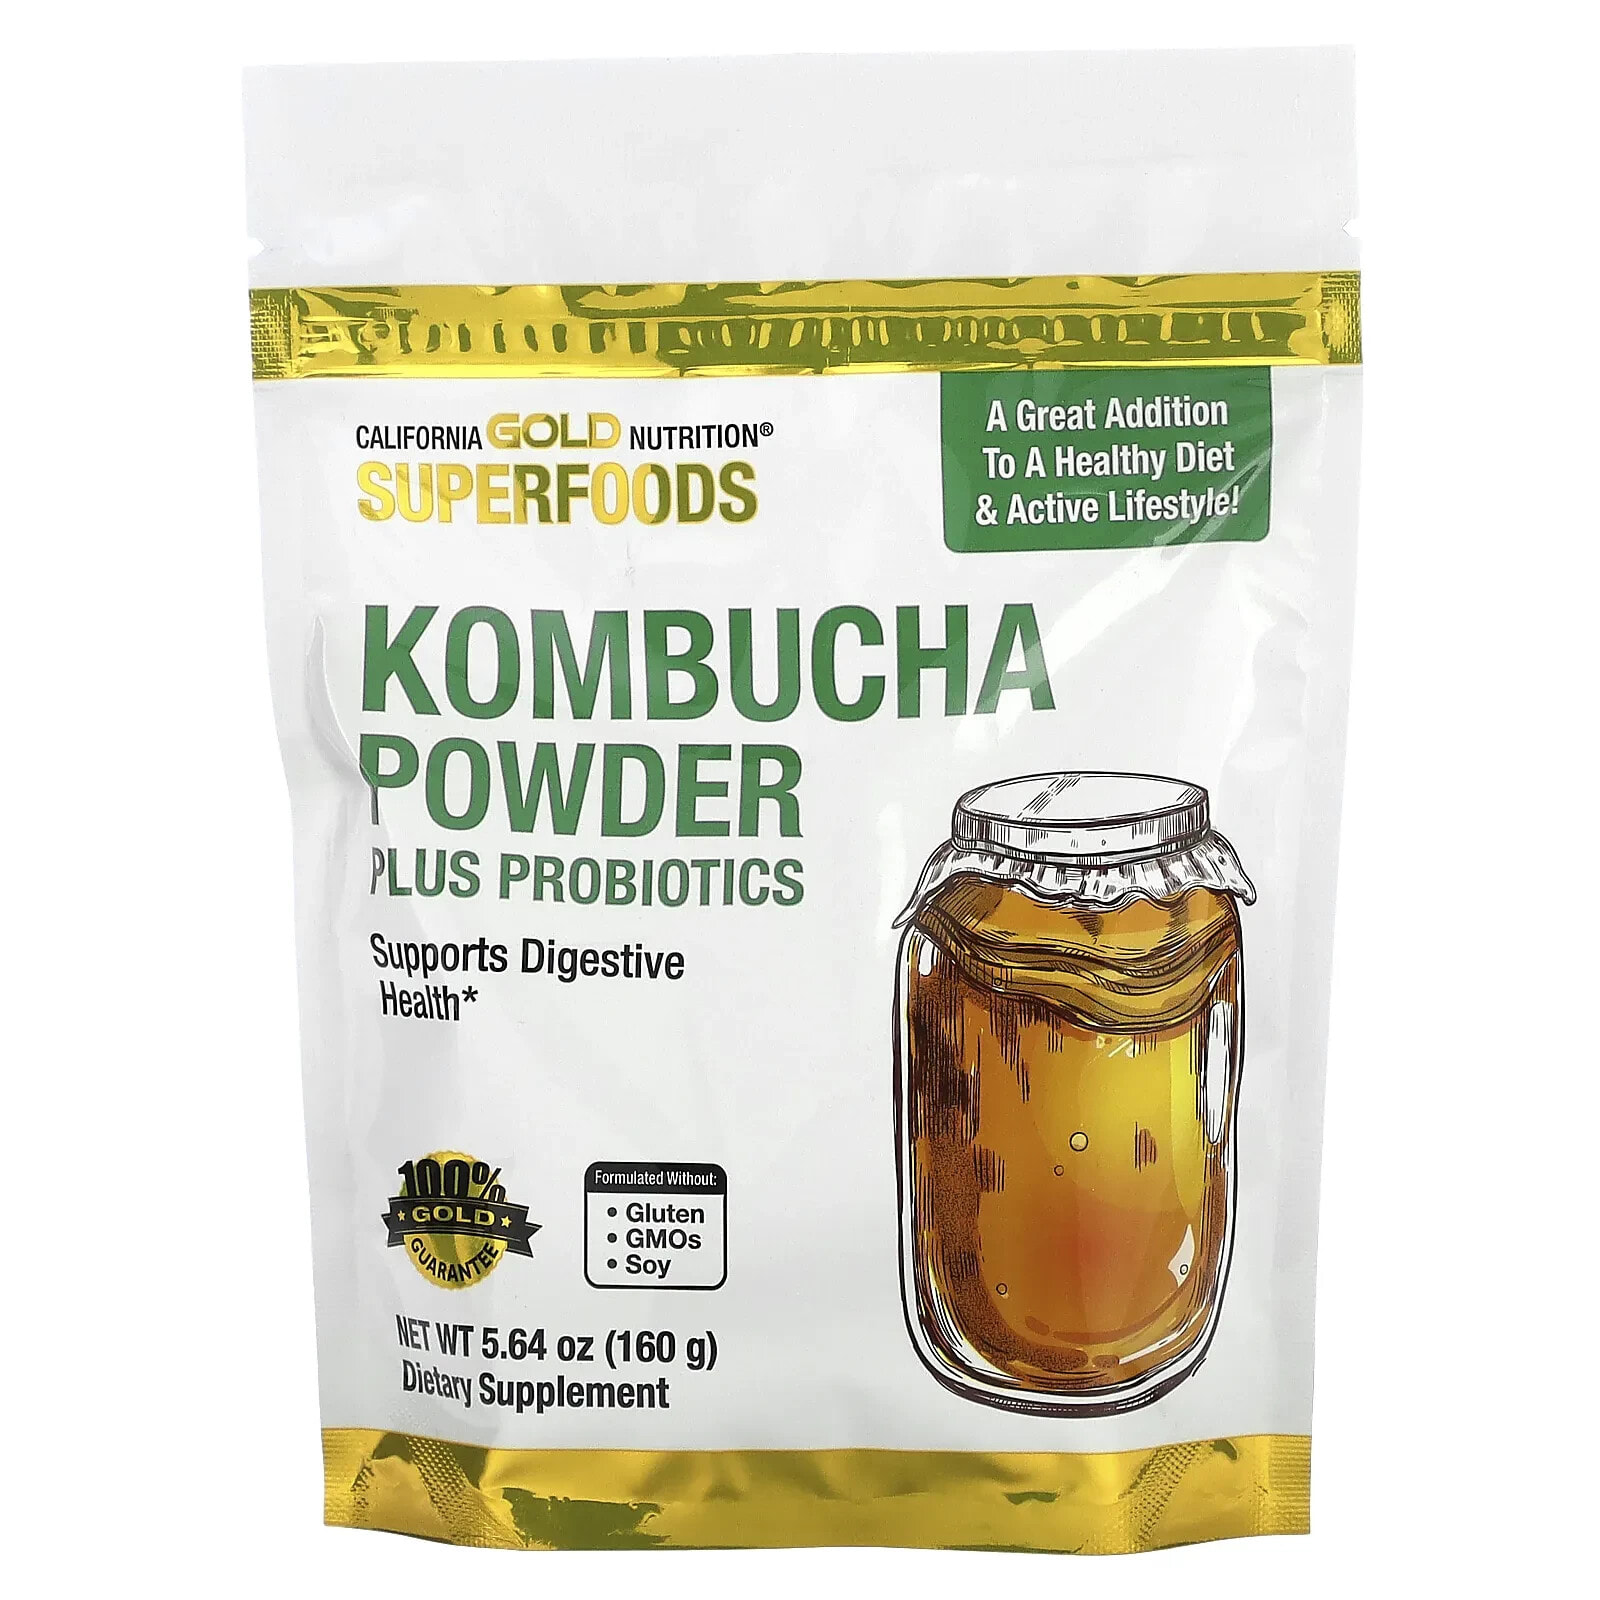 SUPERFOODS - Kombucha Powder Plus Probiotics, 5.64 oz (160 g)